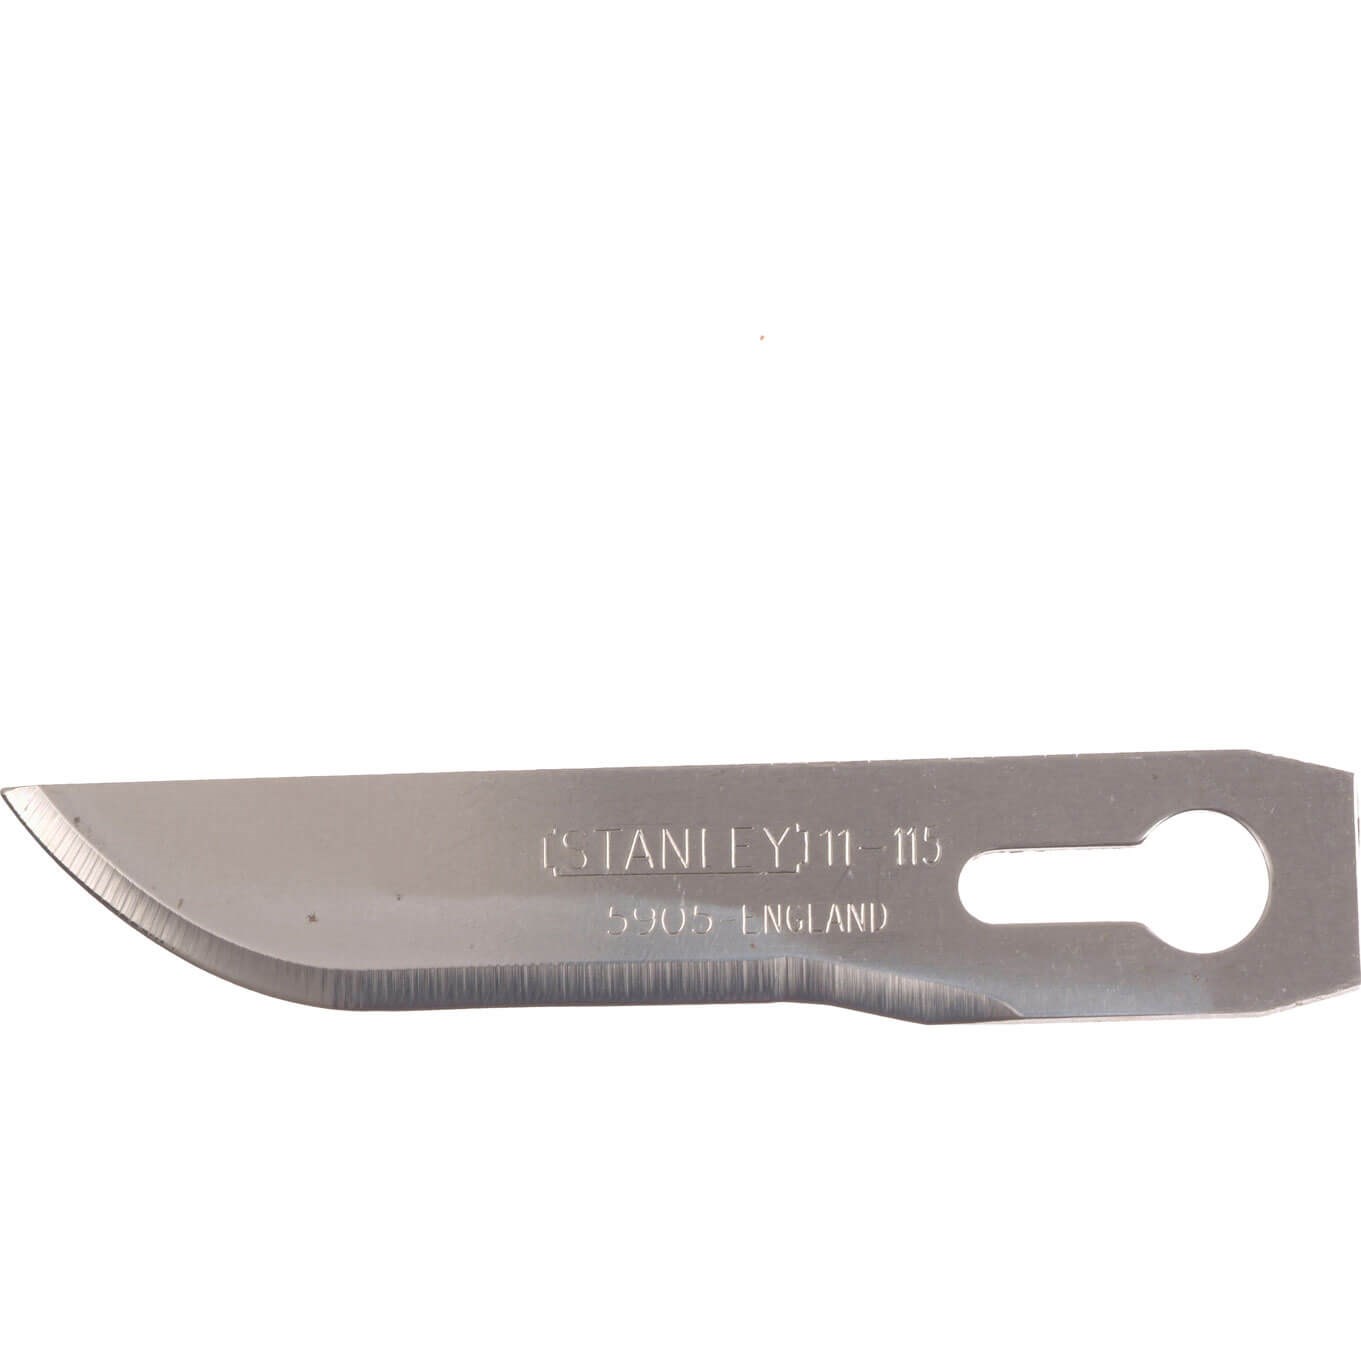 Buy STANLEY Scalpel knives